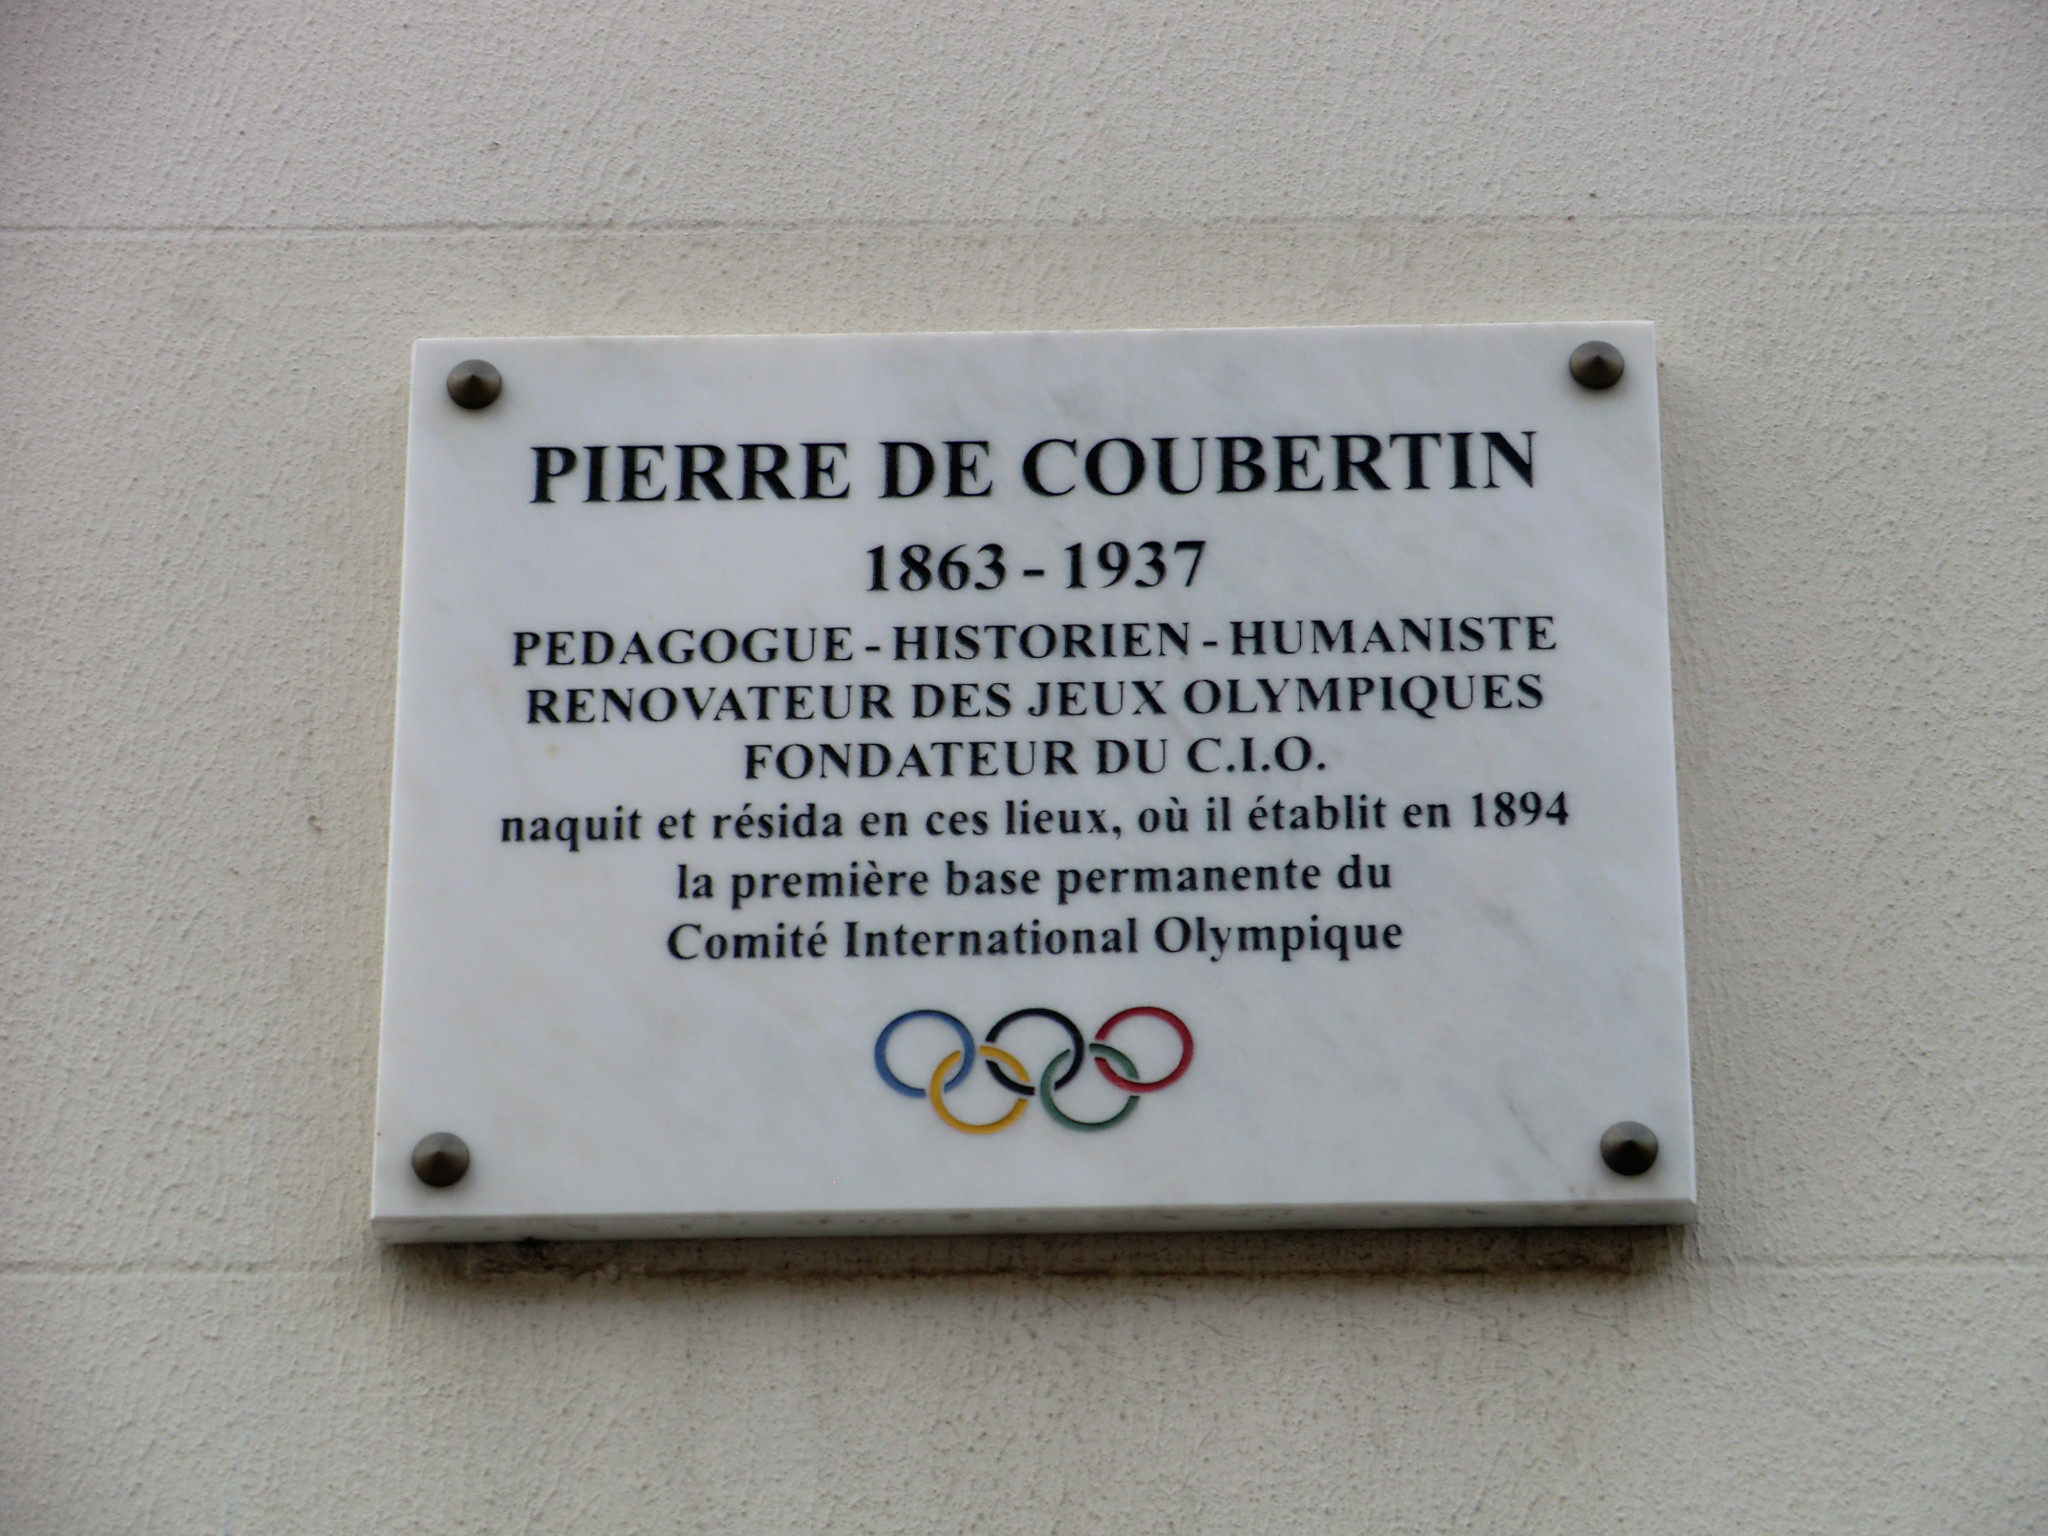 A plaque commemorating the birthplace of Pierre de Coubertin in Paris ©Philip Barker 